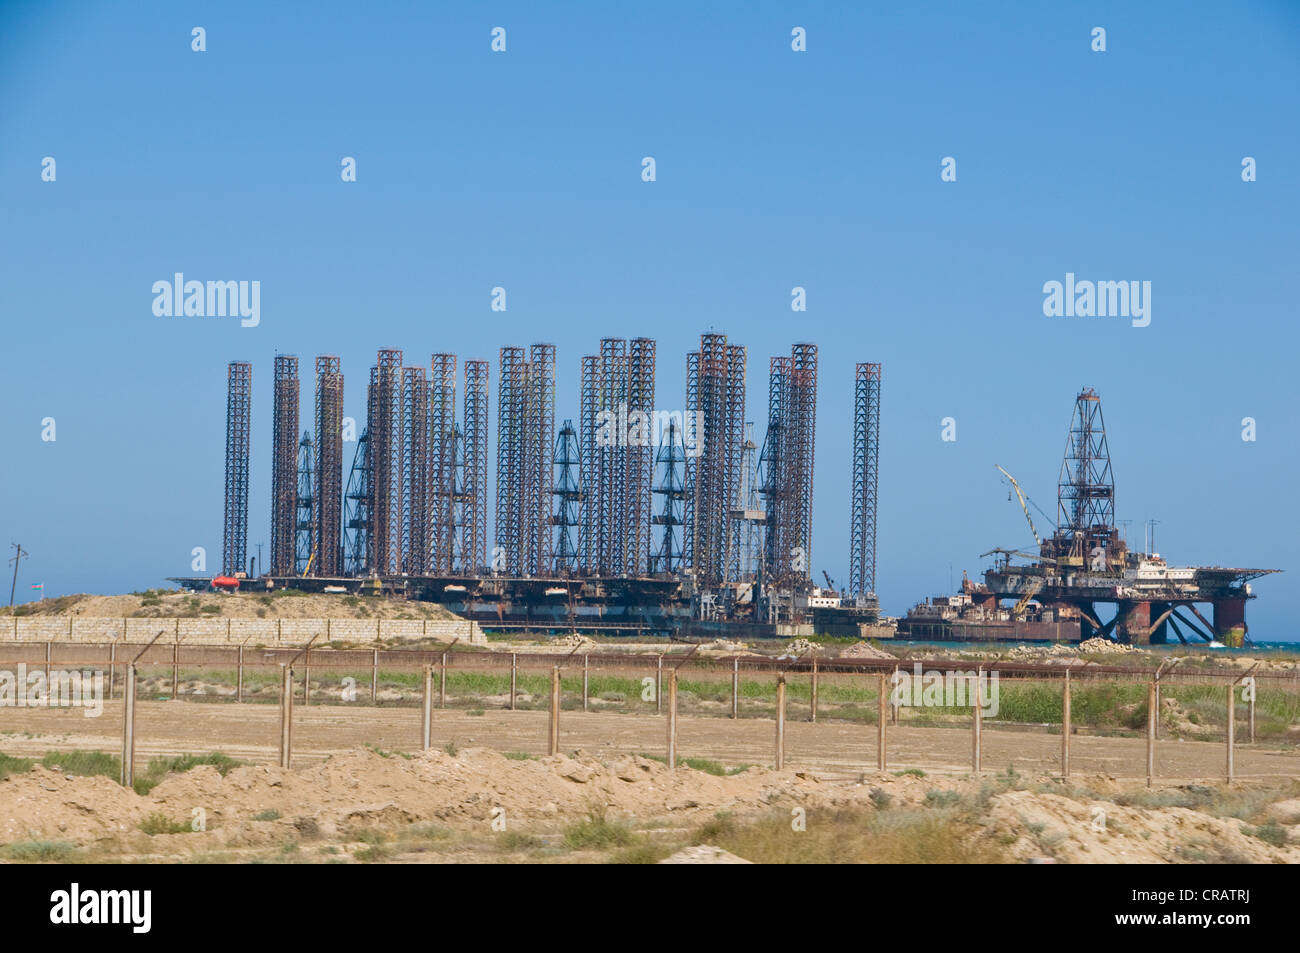 Oil industry on the James Bond oil field, Azerbaijan, Middle East Stock Photo